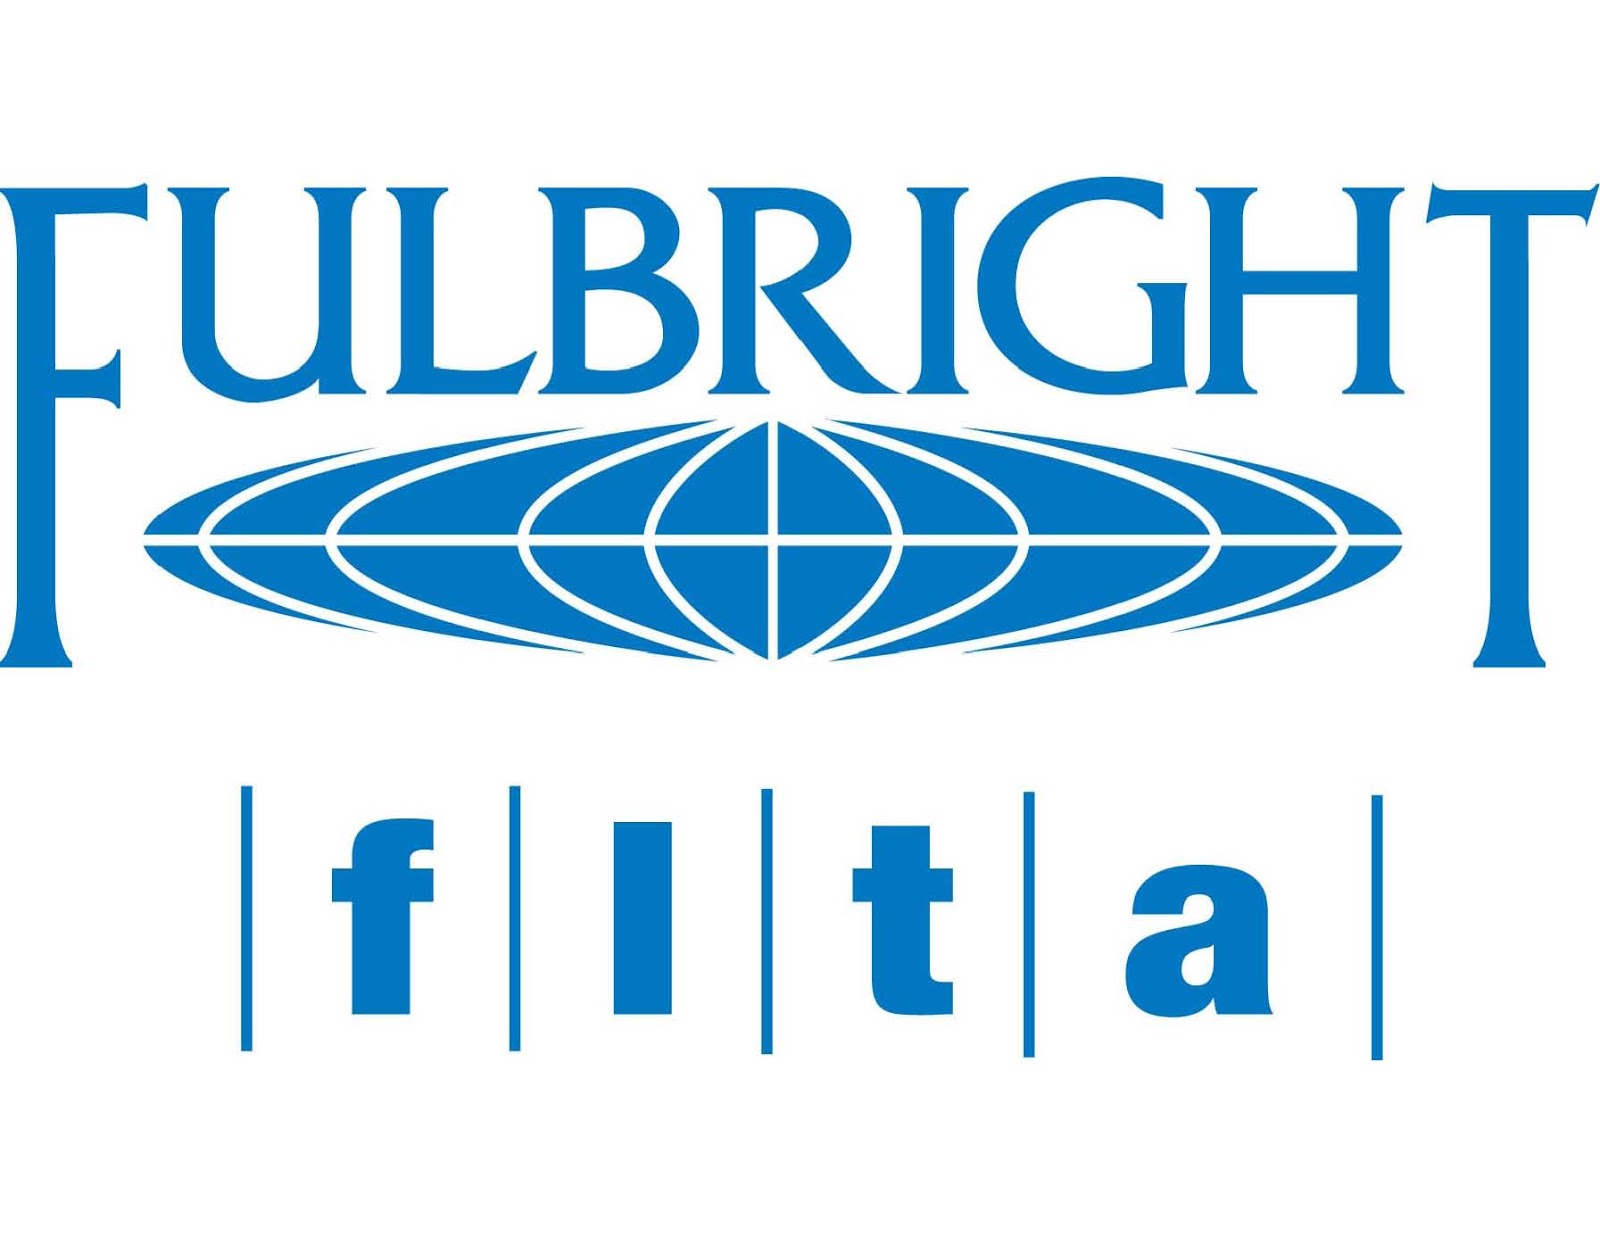 fulbright flta logo 5